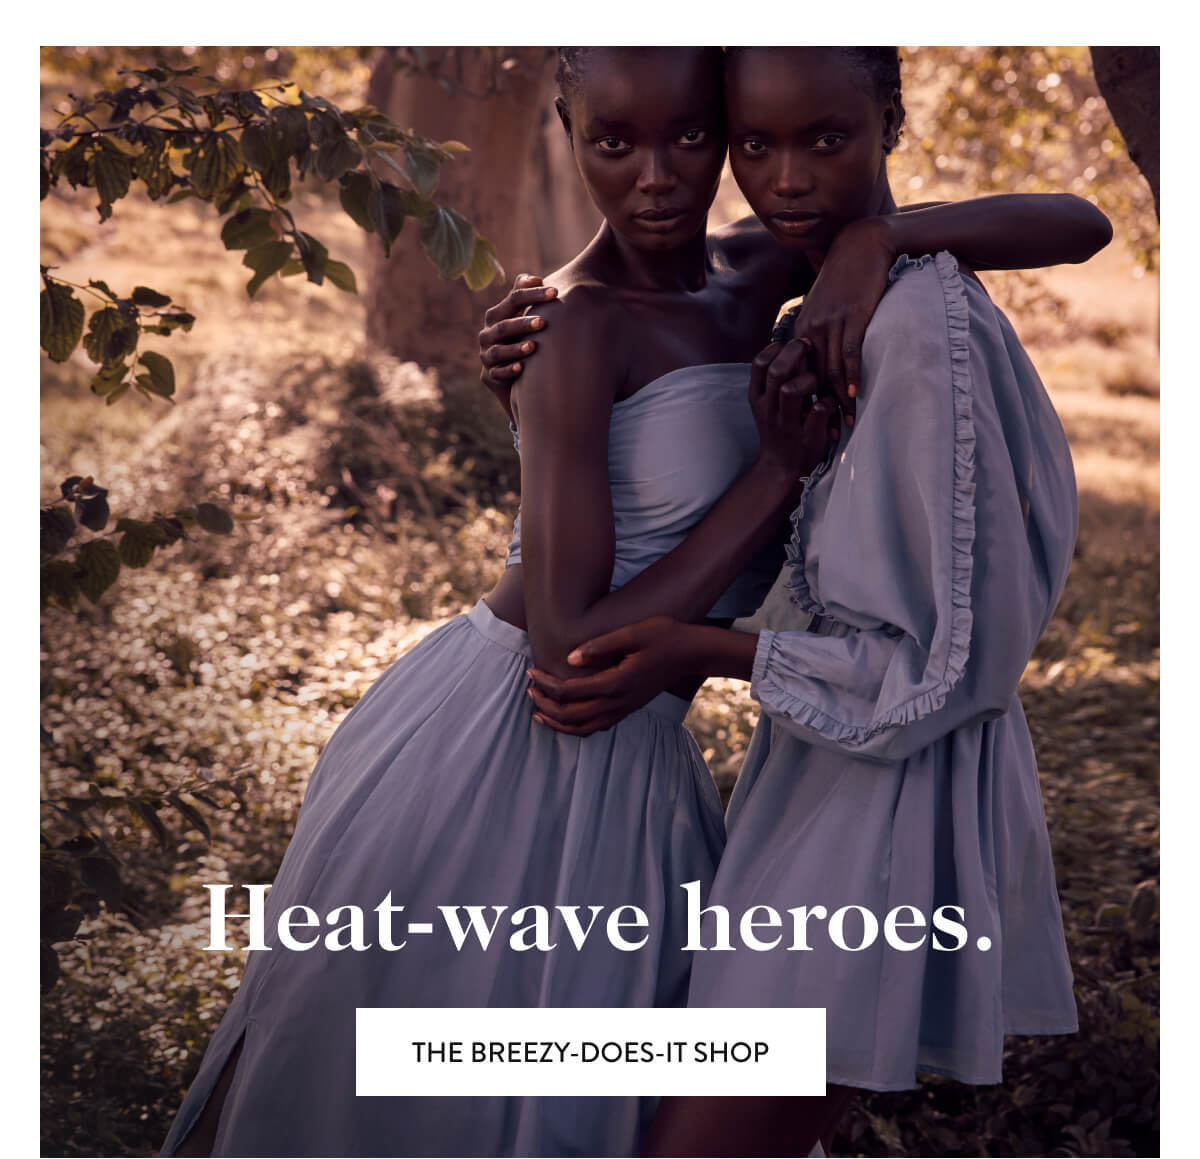 Heat-wave heroes. The breezy-does-it-shop